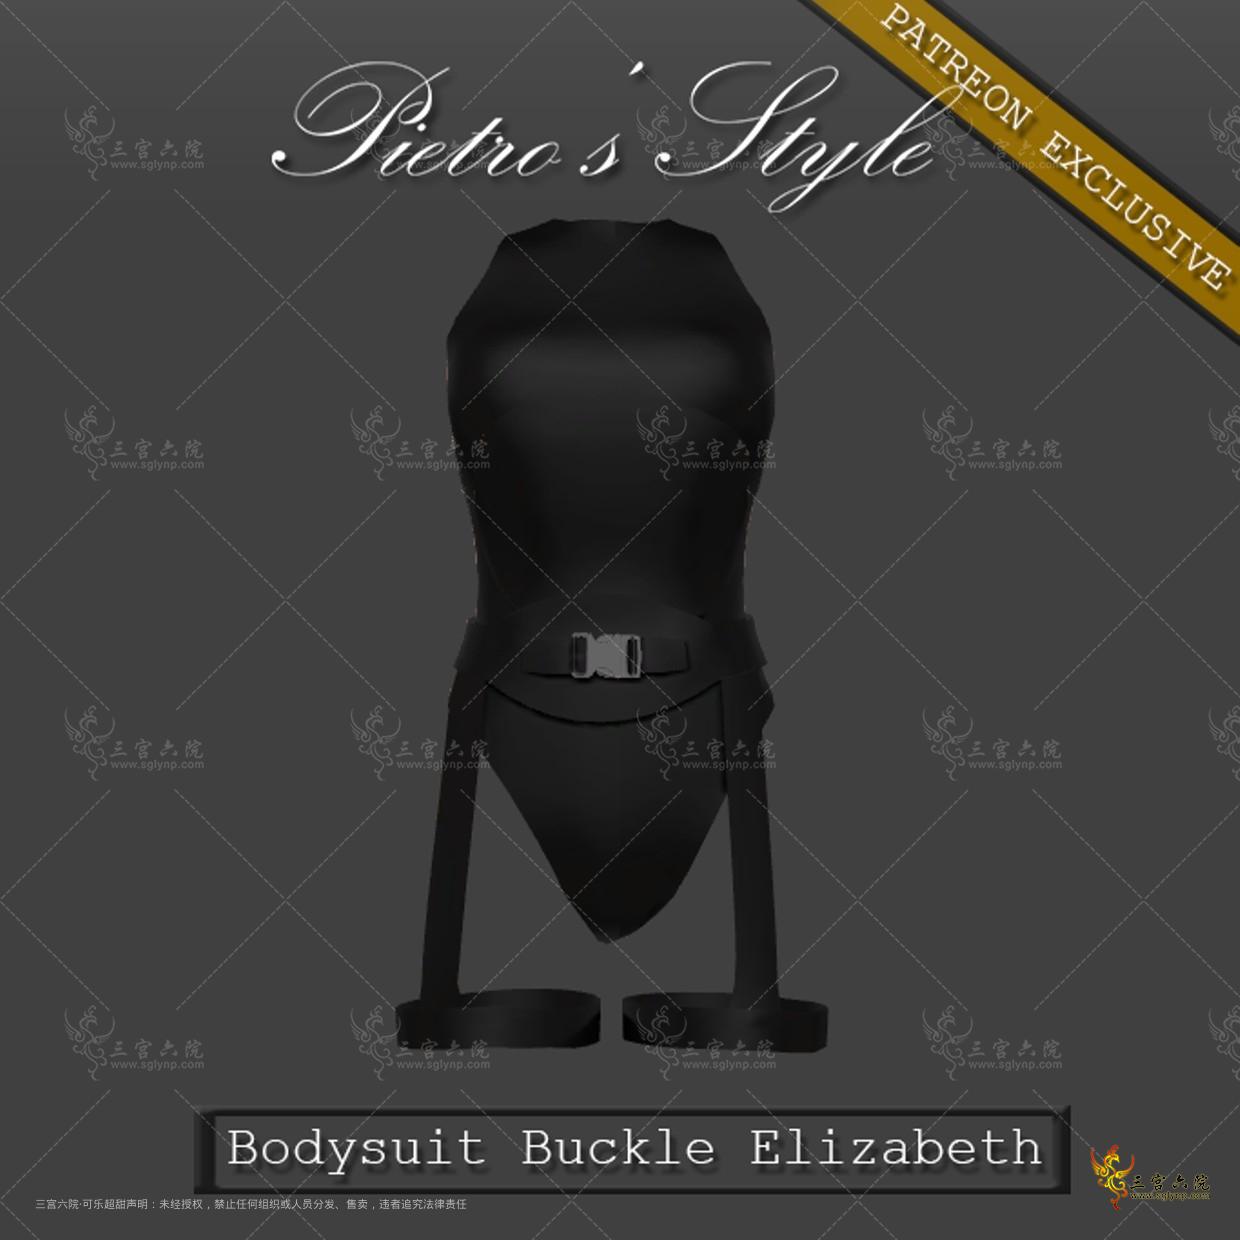 (Pietro's Style) - Bodysuit Buckle Elizabeth.png